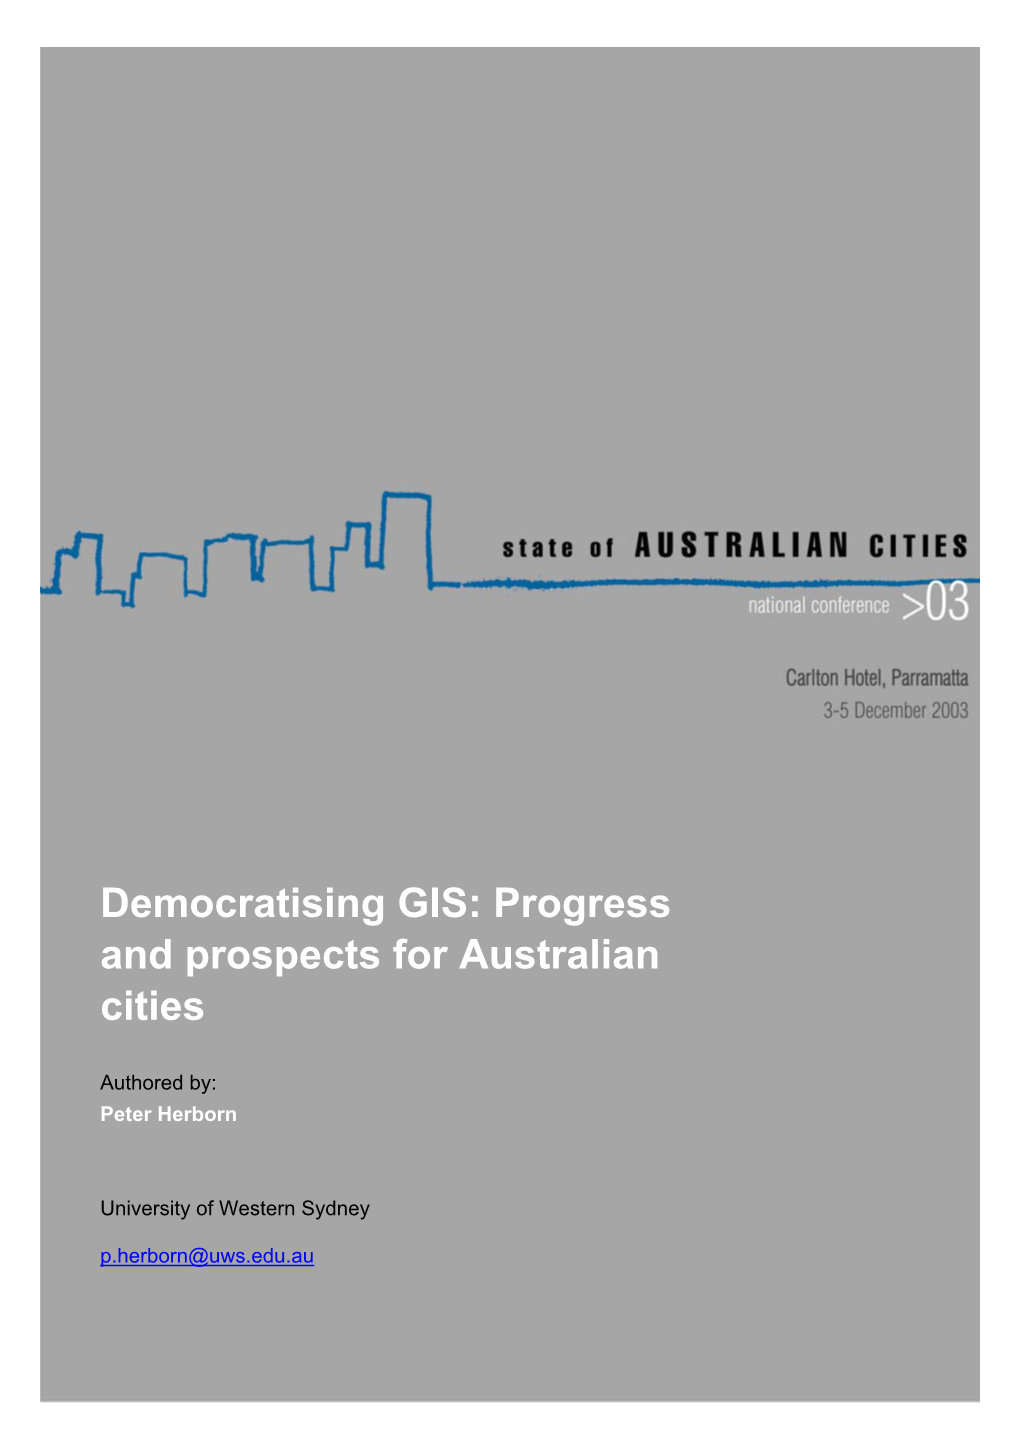 Democratising GIS: Progress and Prospects for Australian Cities